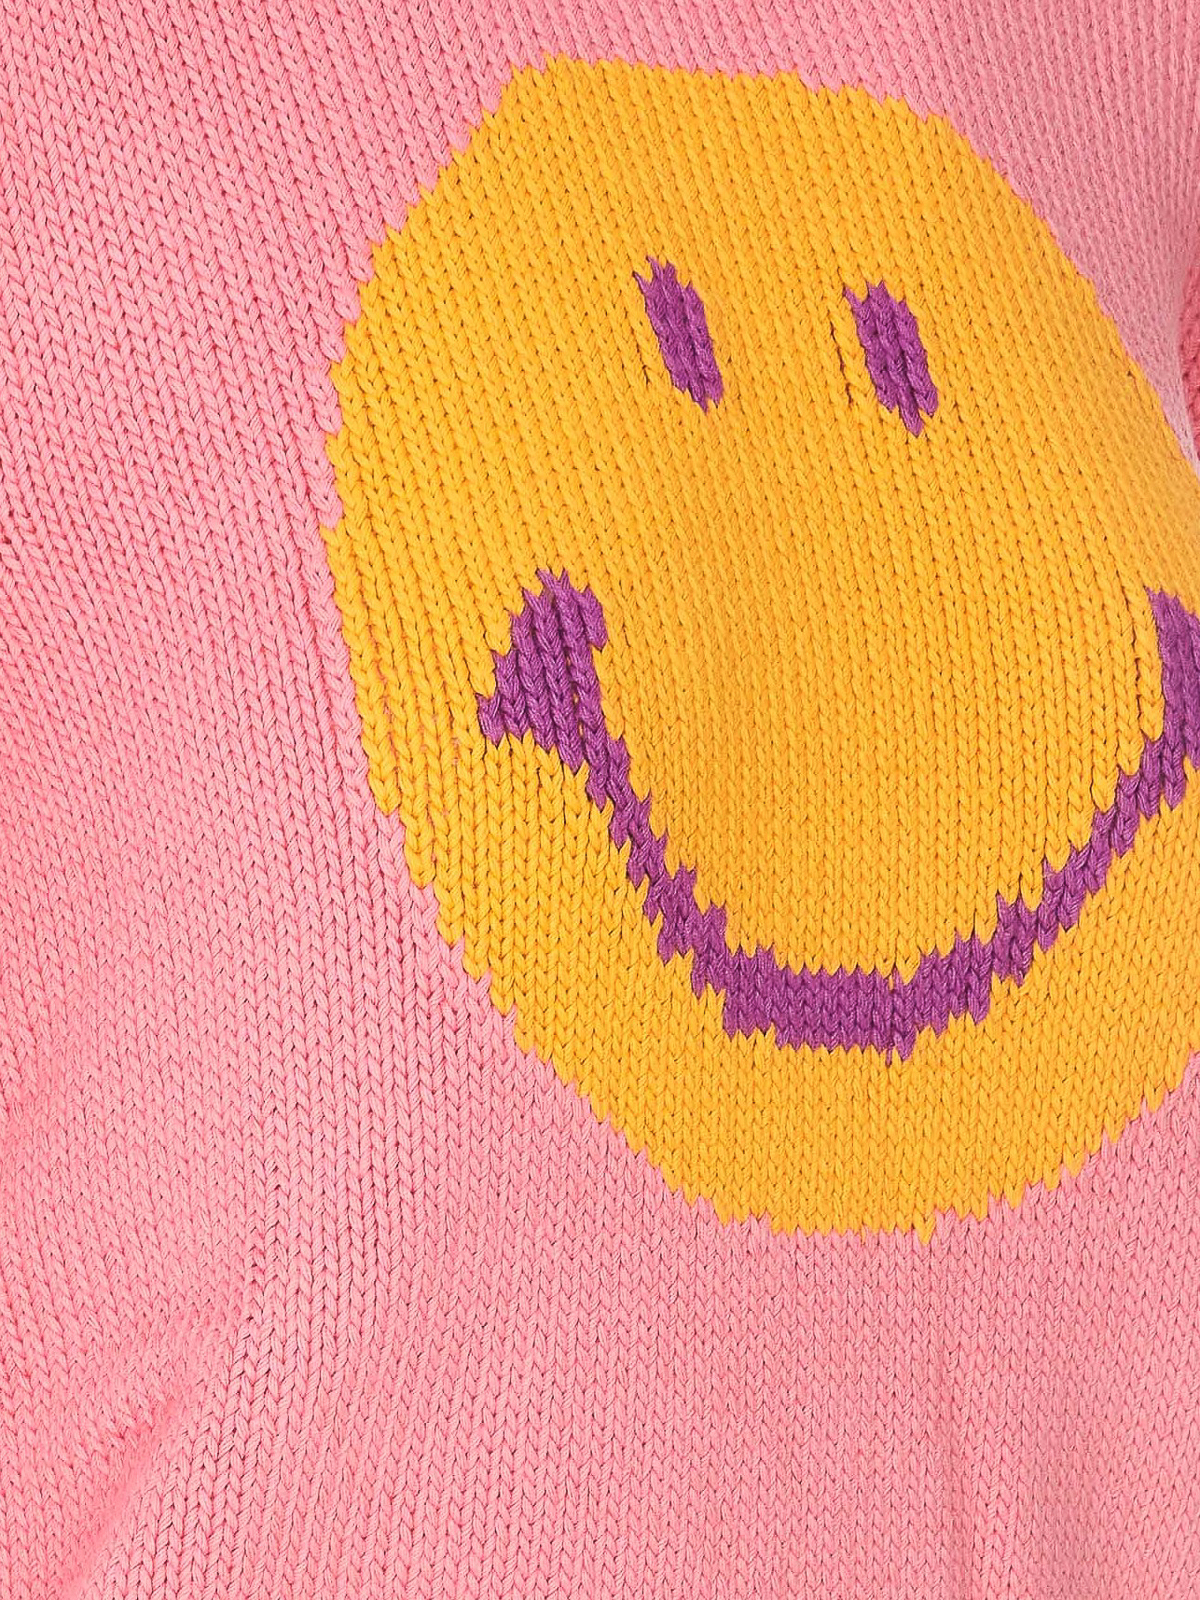 Shop Moschino Smiley Crewneck In Pink